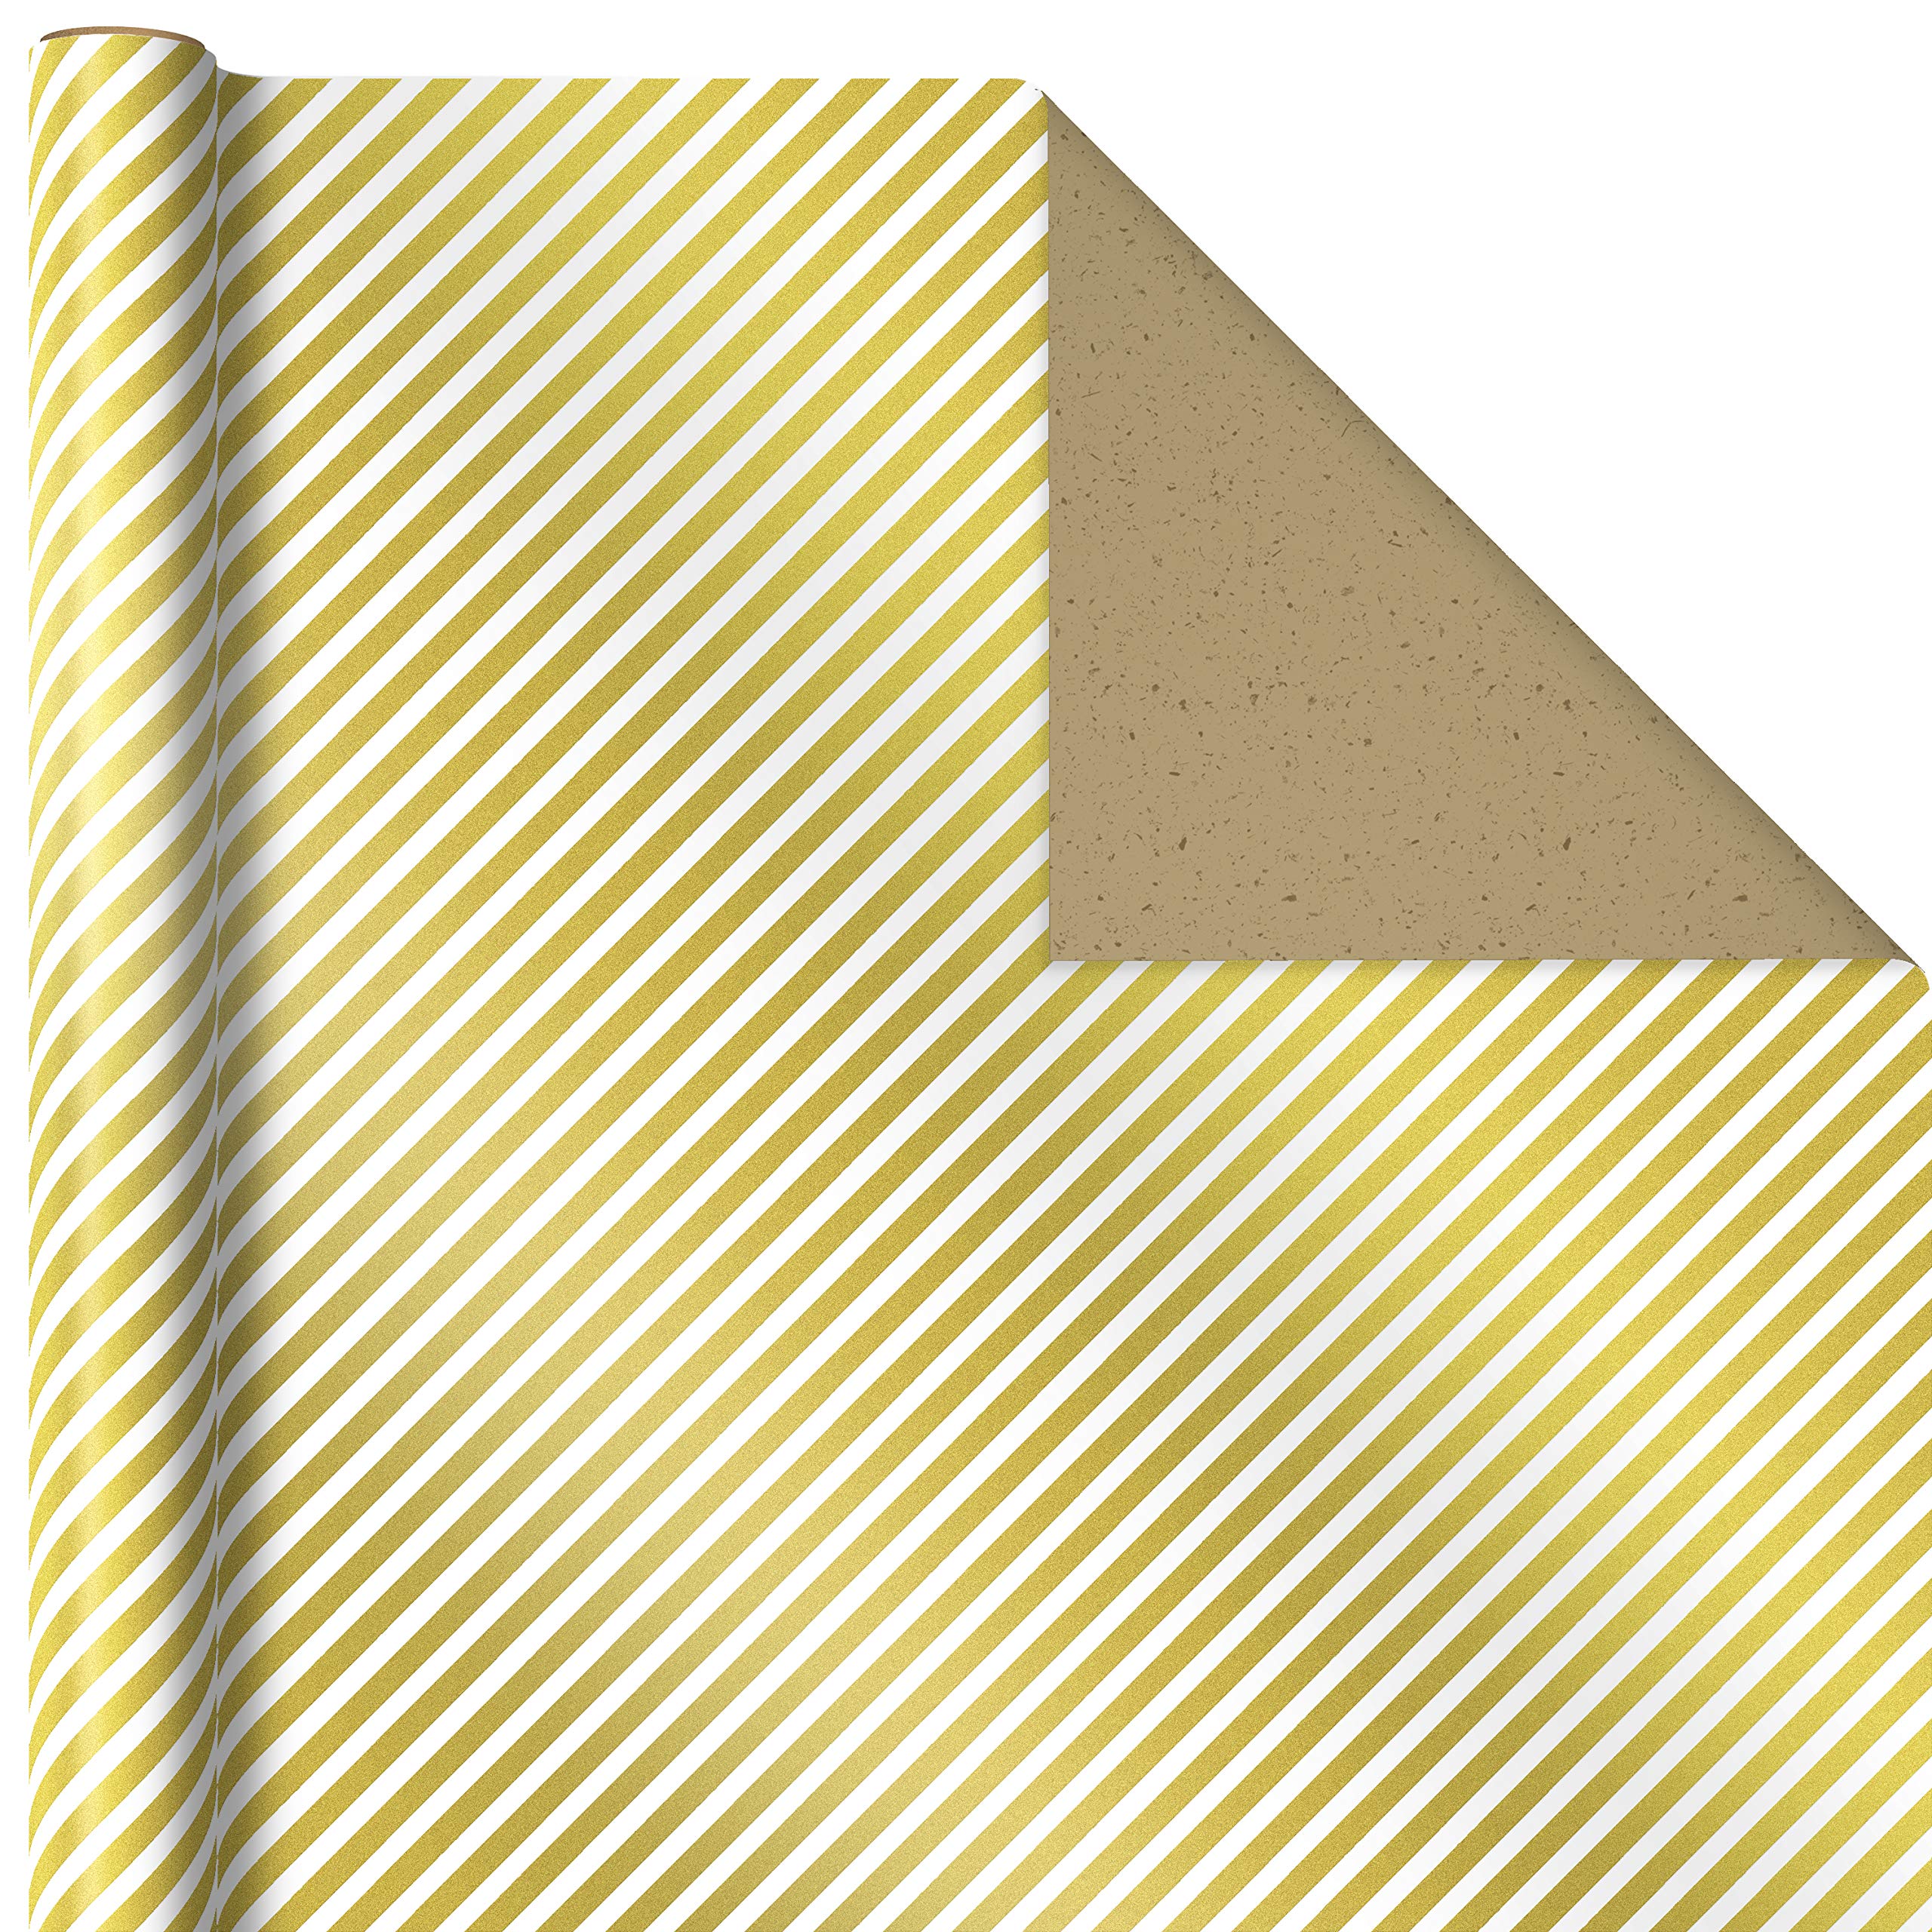 Hallmark All Occasion Reversible Wrapping Paper - Gold & Kraft Stripes, Triangles, Chevron, Polka Dots (3 Rolls: 75 sq. ft. ttl) for Birthdays, Christmas, Hanukkah, Crafts